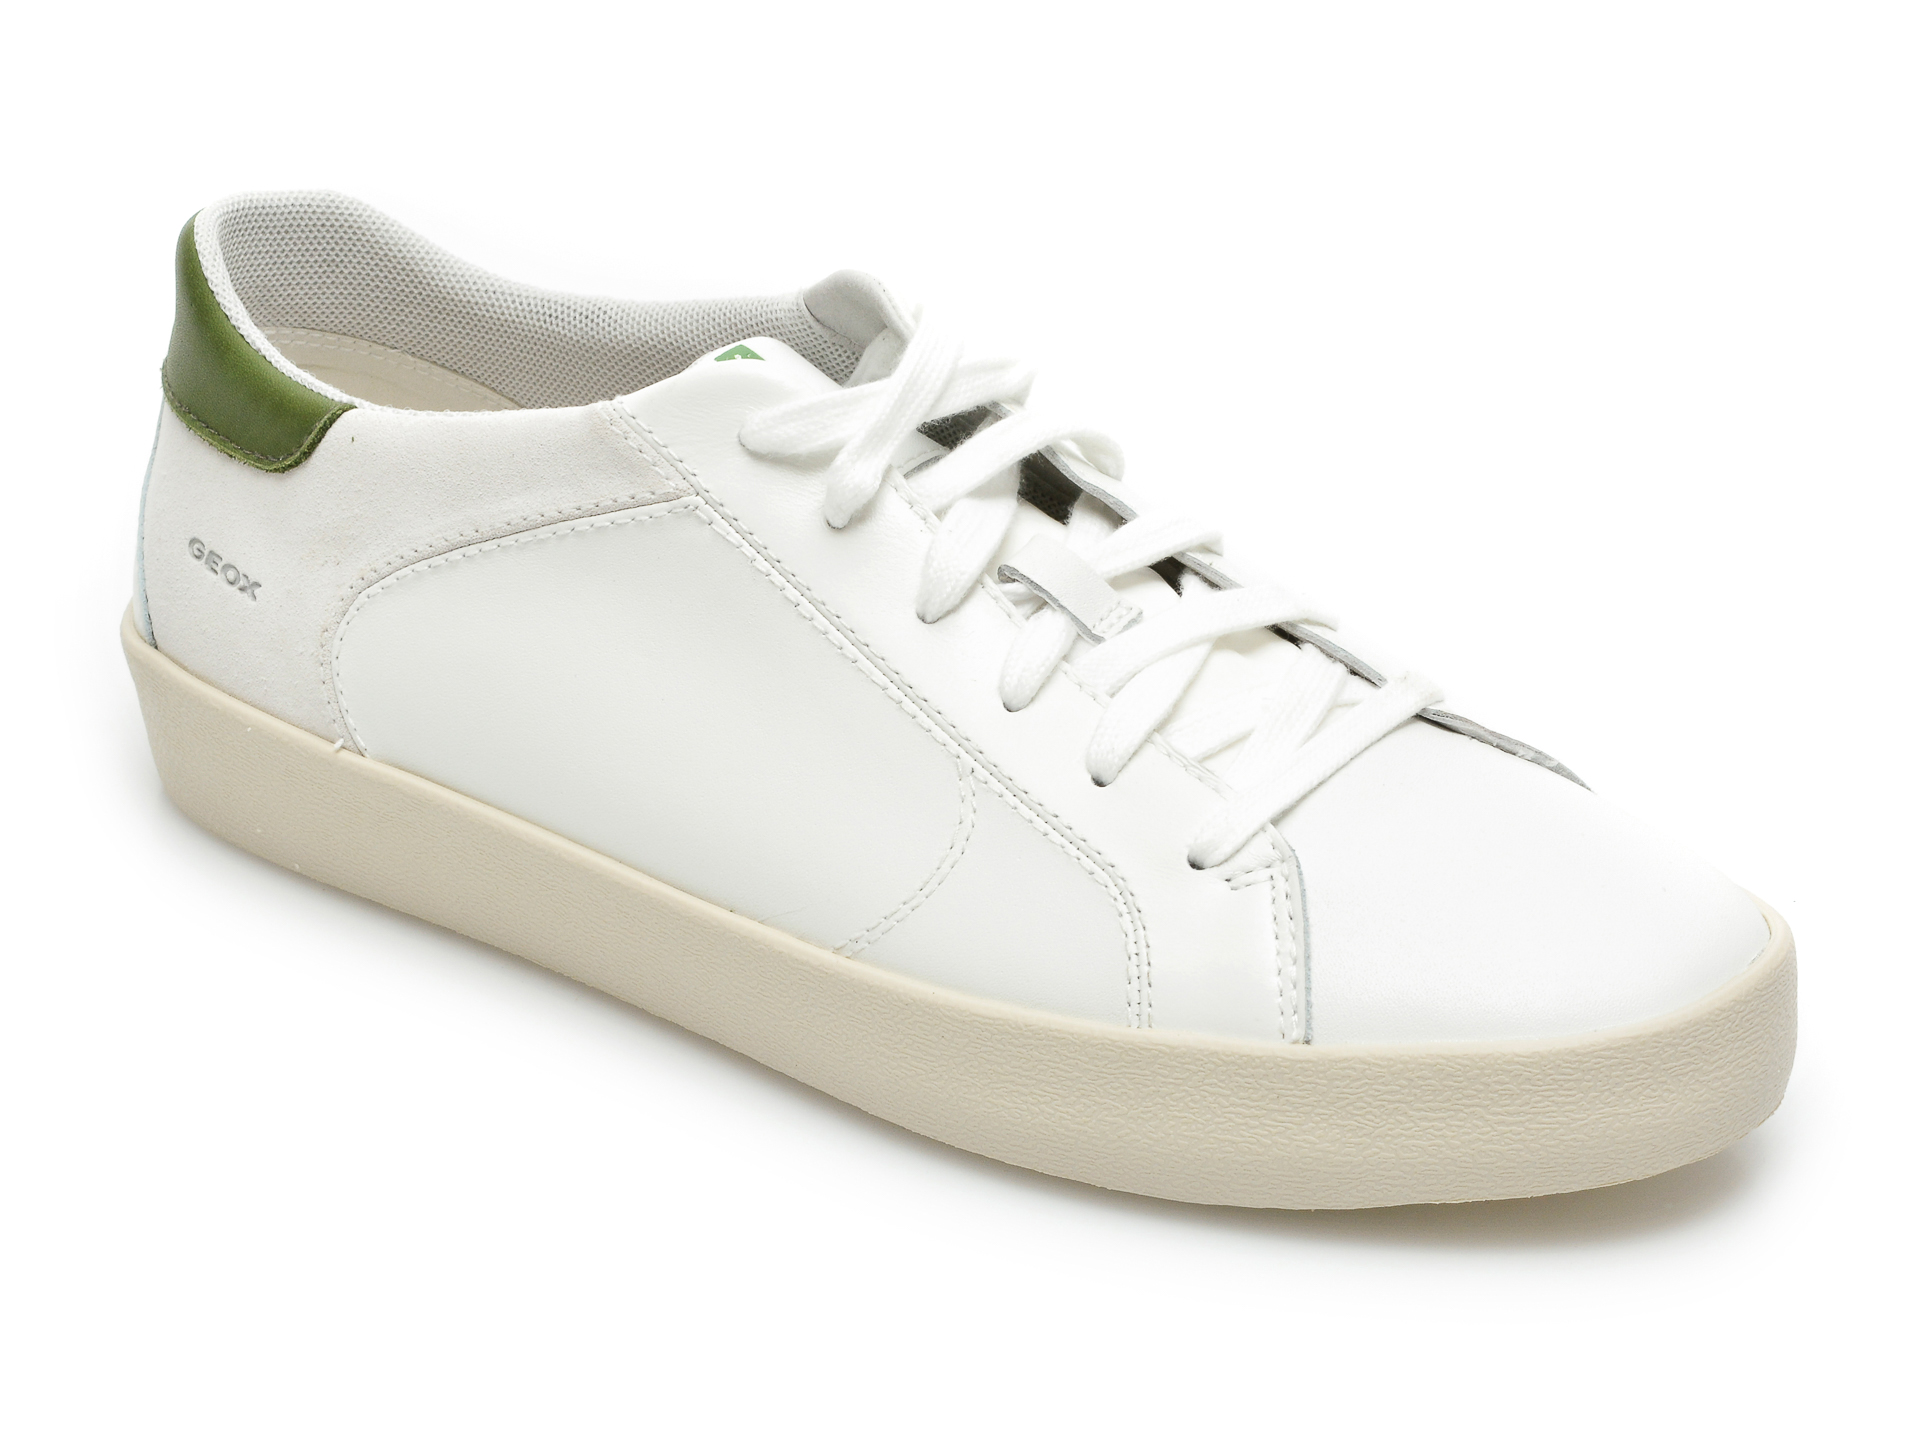 Pantofi sport GEOX albi, U156HA, din piele naturala Geox Geox